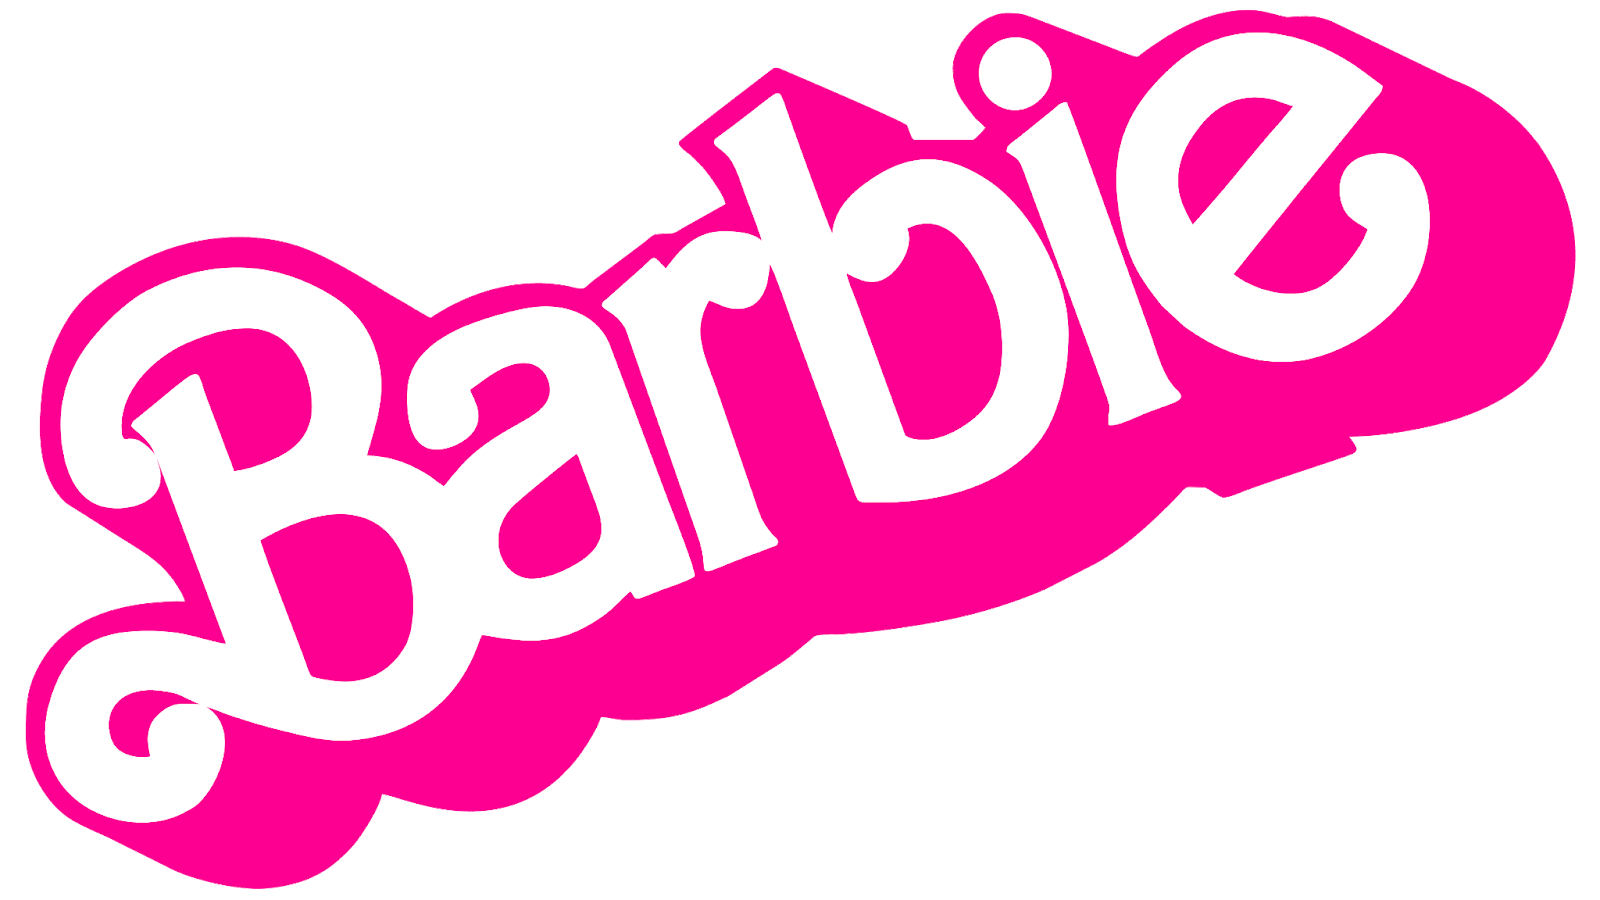 barbie logo 1975